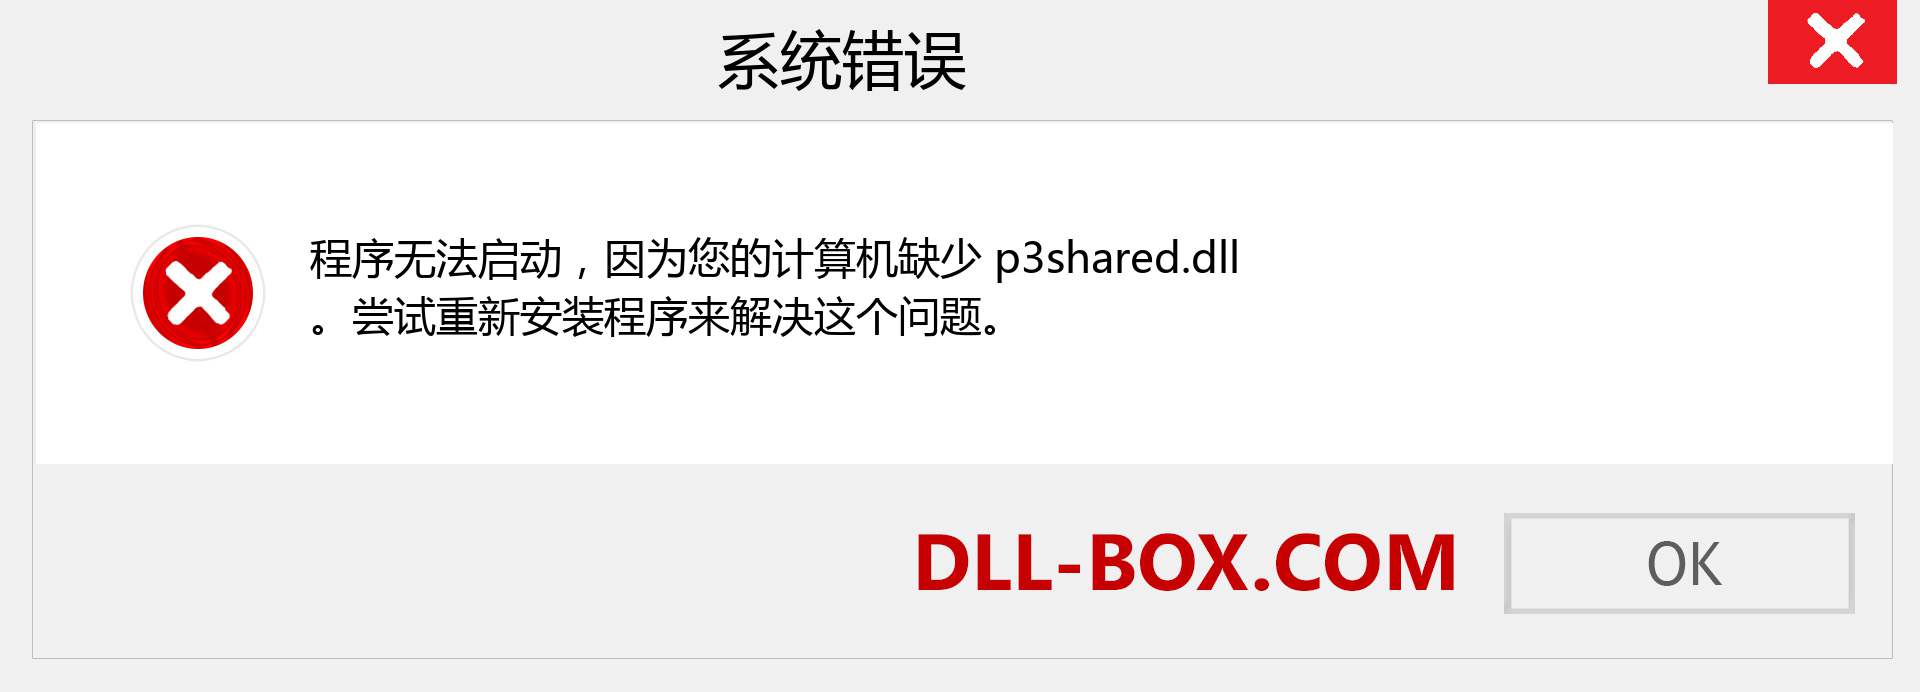 p3shared.dll 文件丢失？。 适用于 Windows 7、8、10 的下载 - 修复 Windows、照片、图像上的 p3shared dll 丢失错误